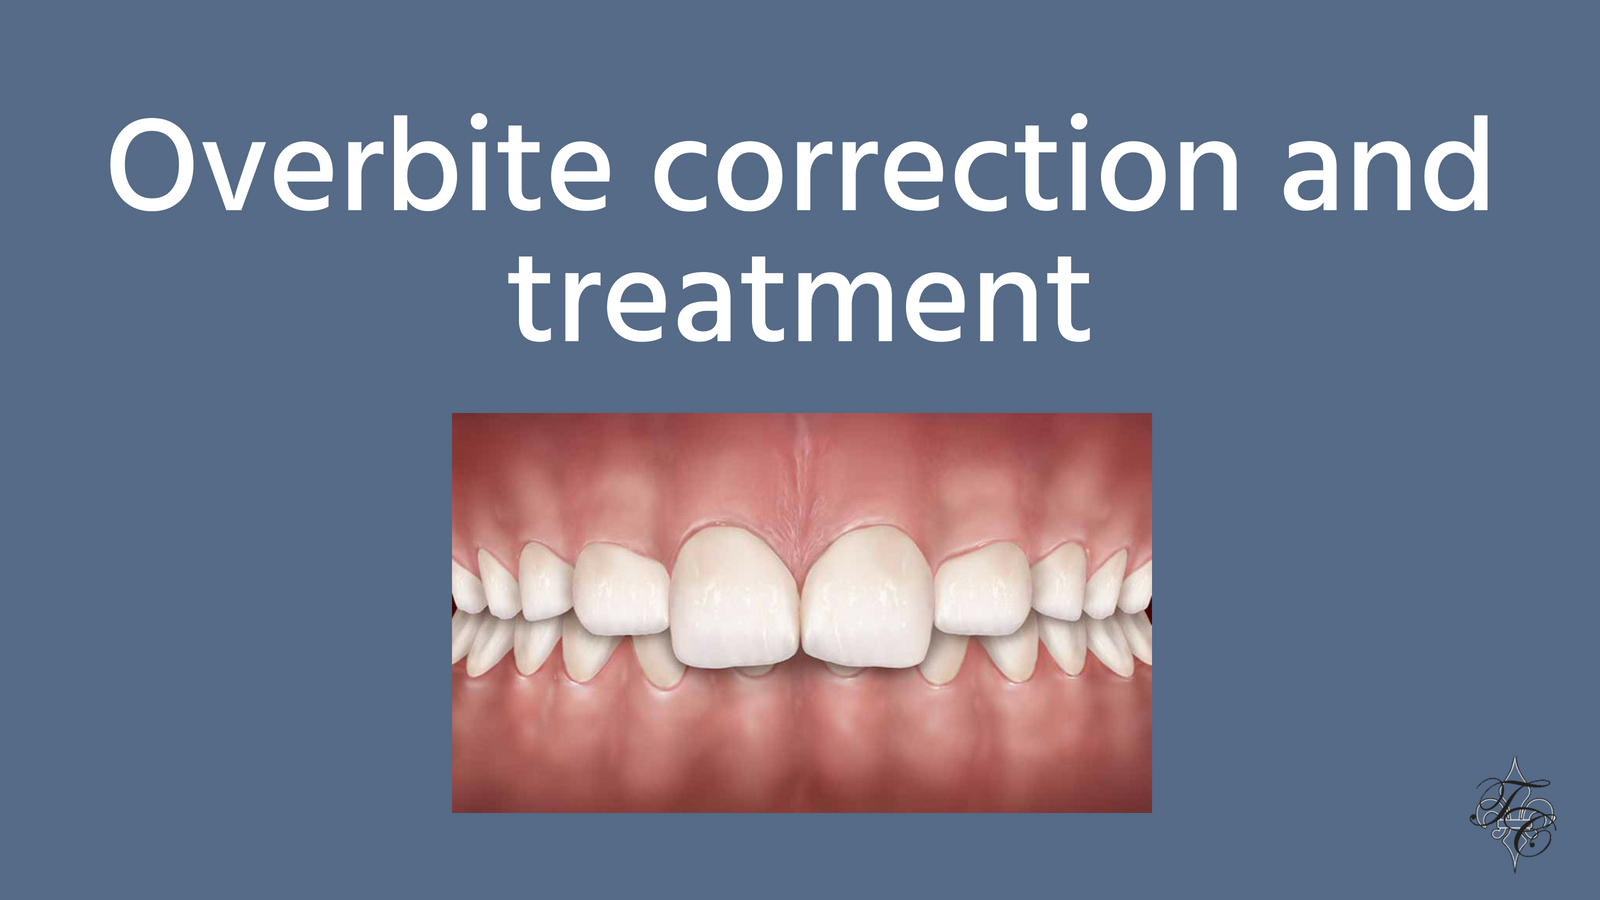 https://lafayettedentistchauvin.com/wp-content/uploads/2018/08/Overbite-correction-and-treatment_-tim-chauvin-dental-lafayette-la.png